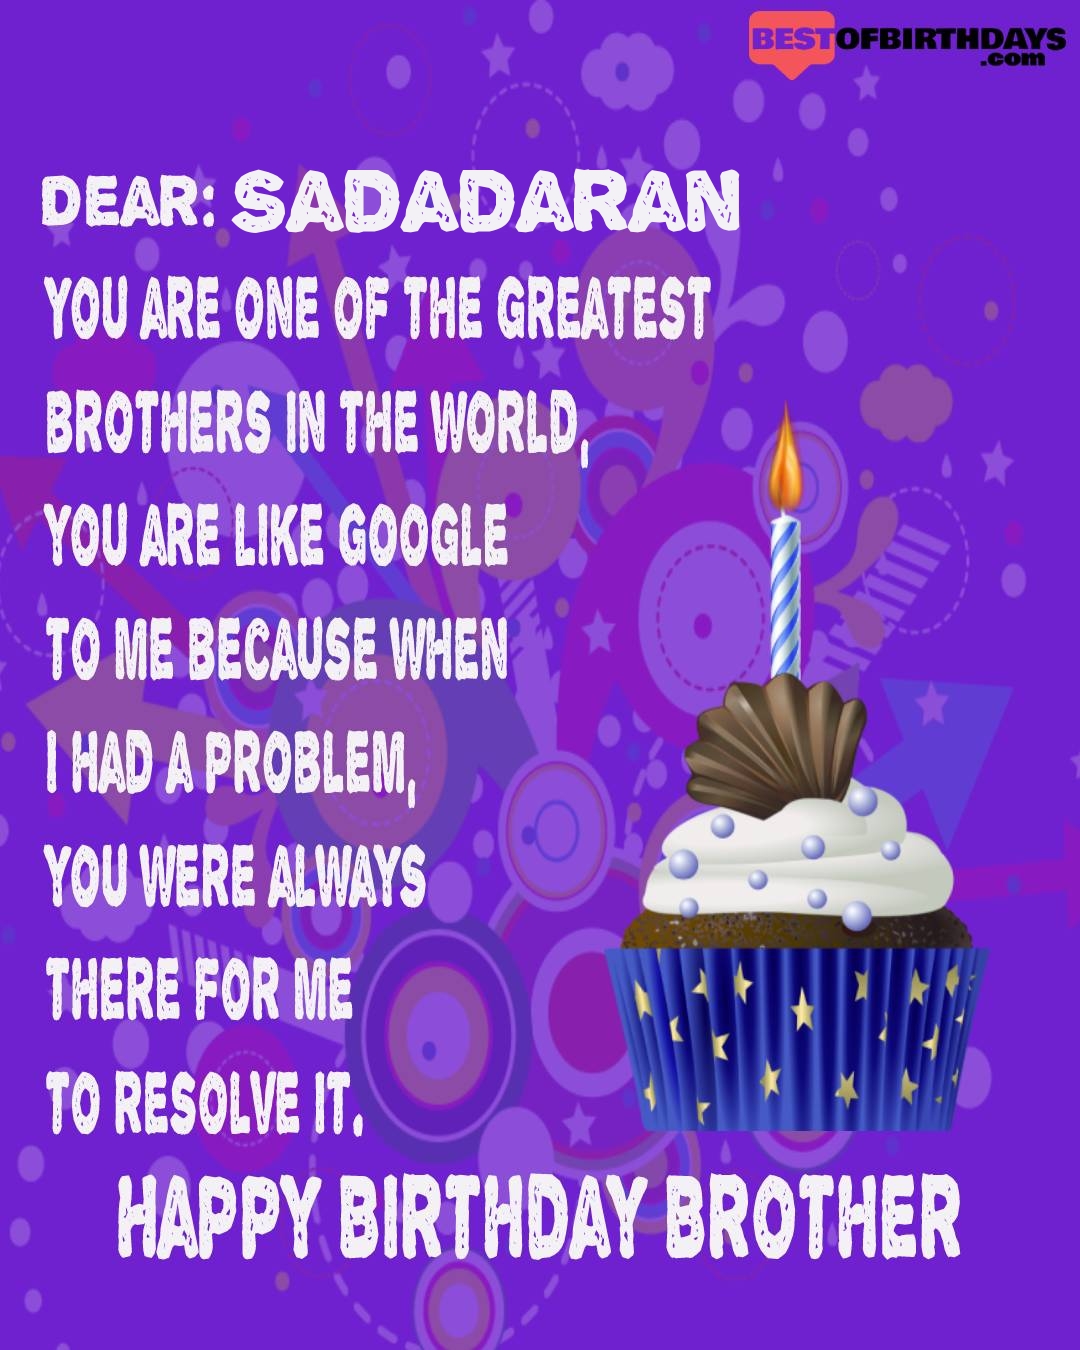 Happy birthday sadadaran bhai brother bro